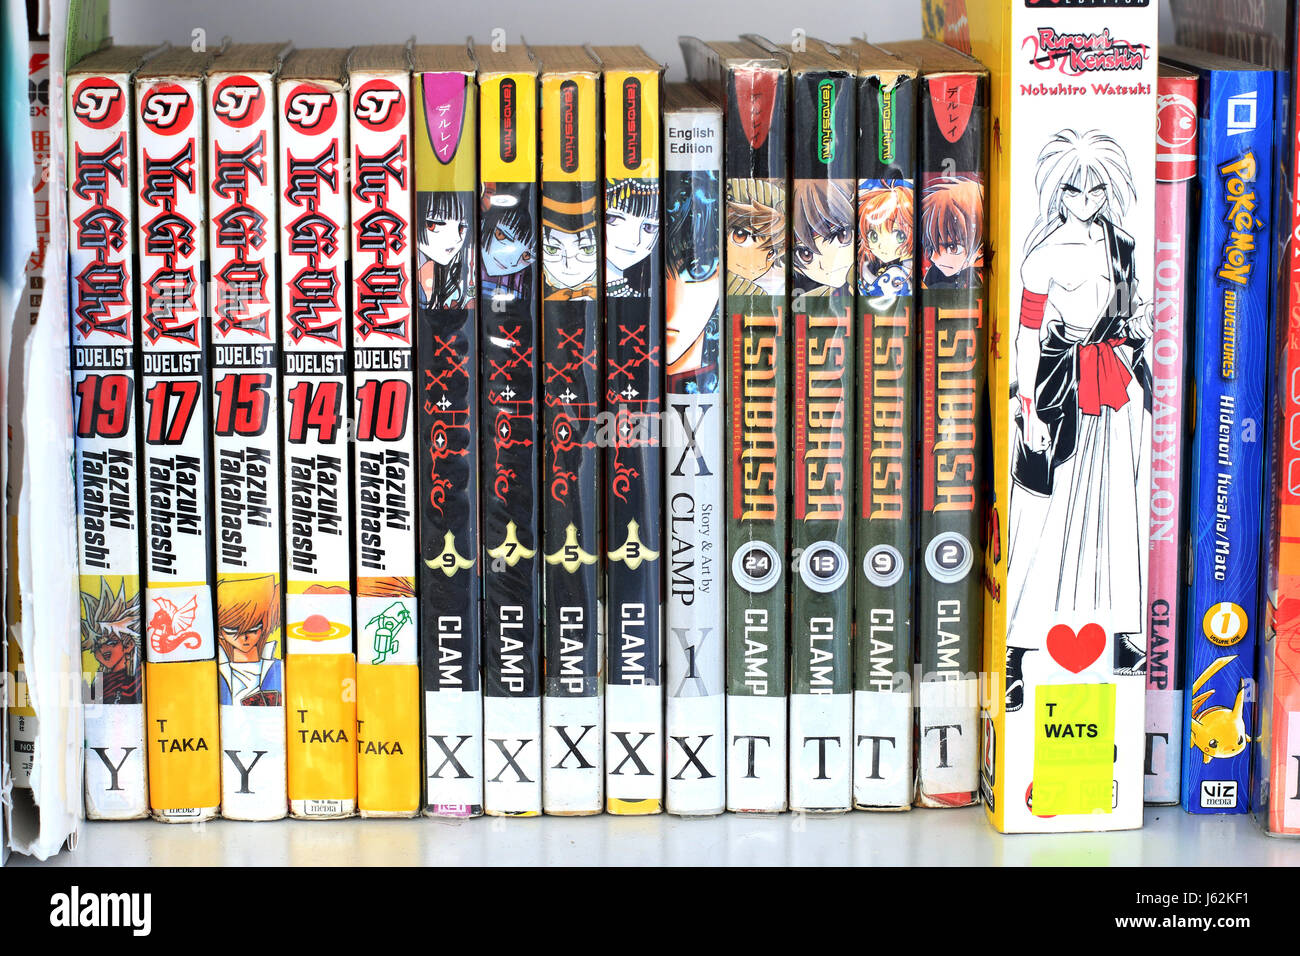 Anime books on display on book shelf Stock Photo - Alamy